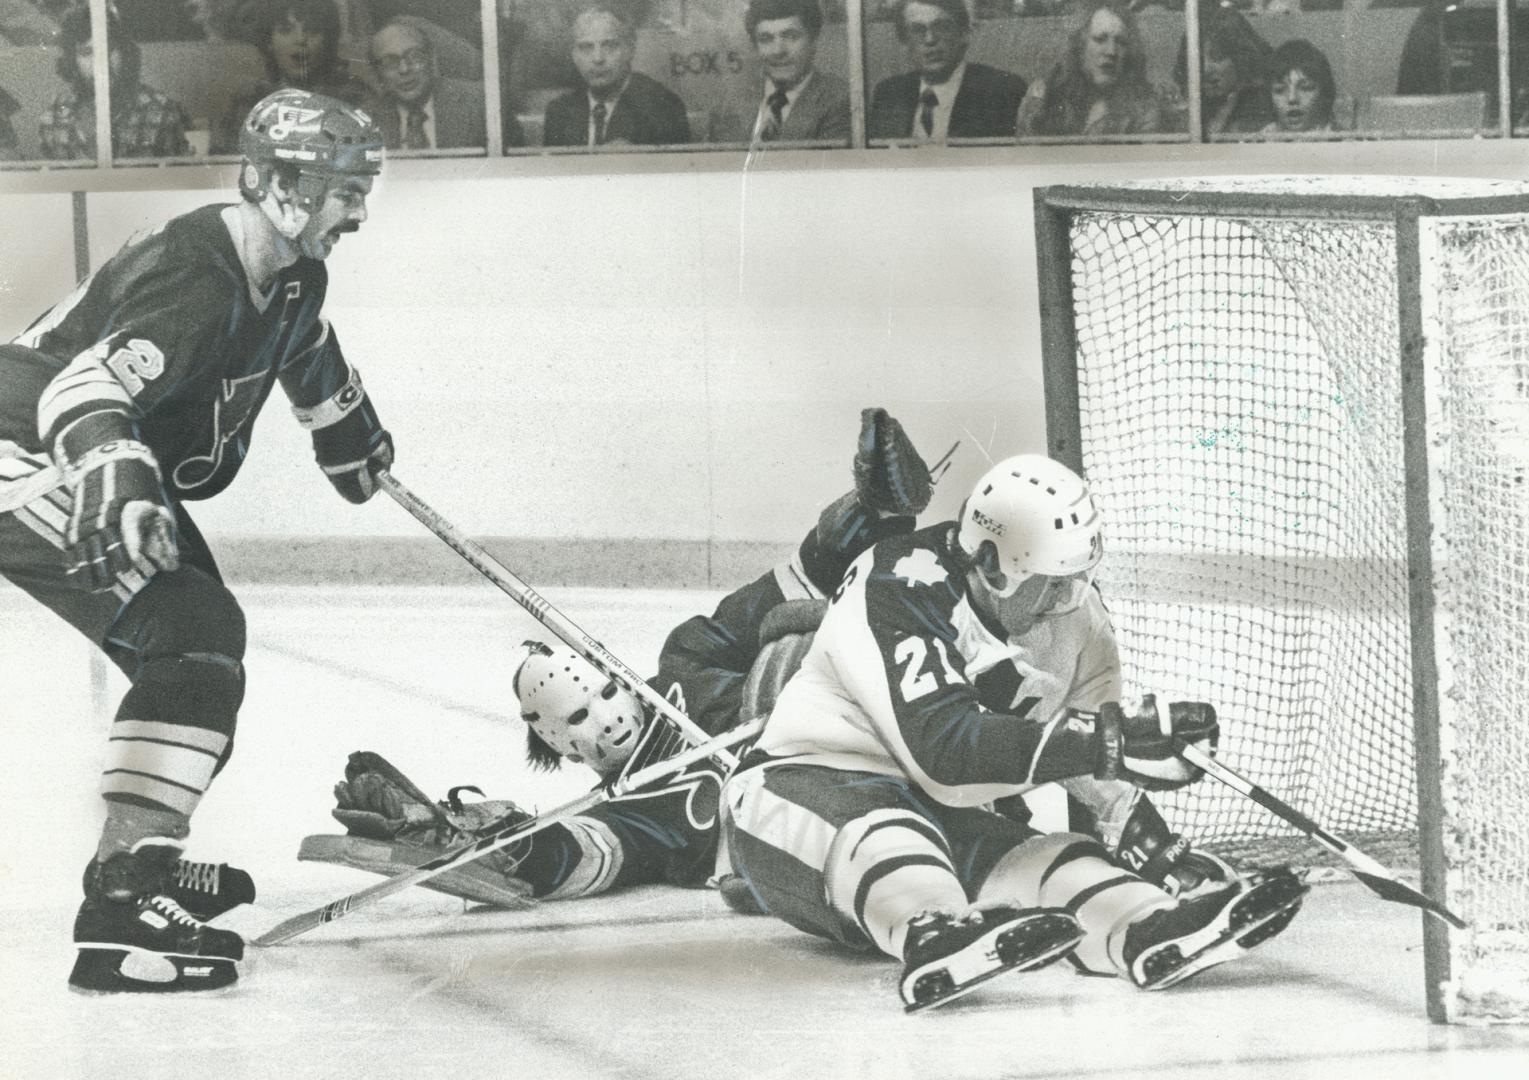 He's too good': How Börje Salming made hockey history in Toronto